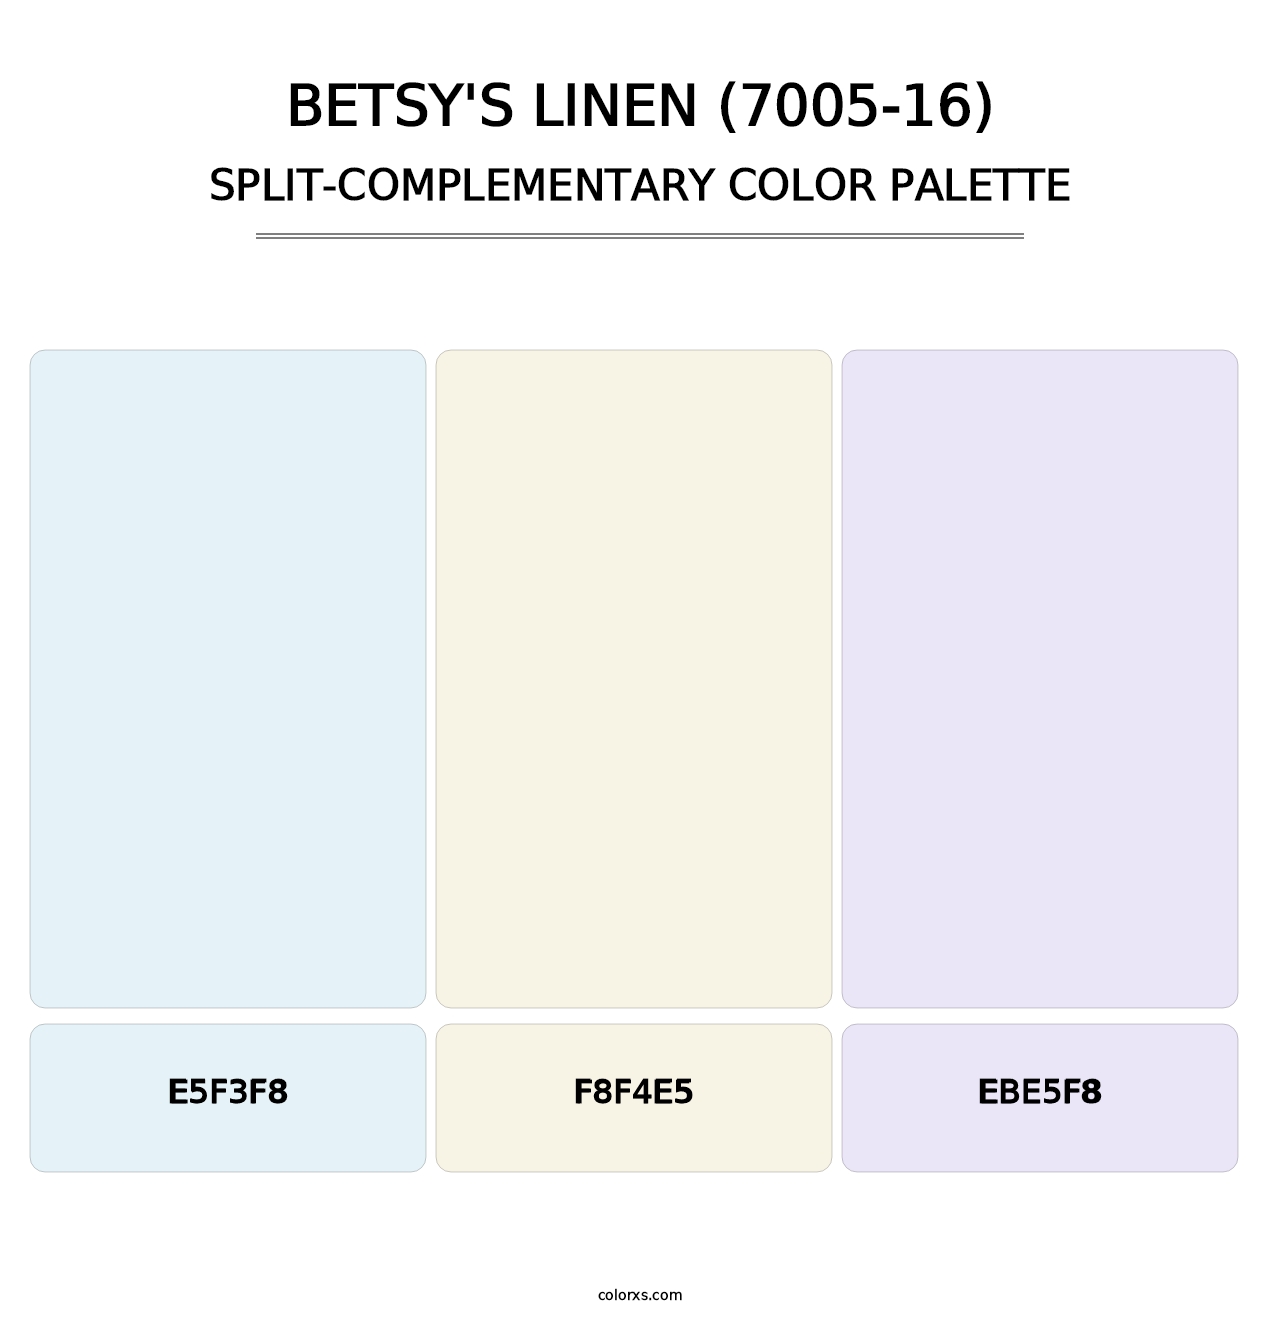 Betsy's Linen (7005-16) - Split-Complementary Color Palette